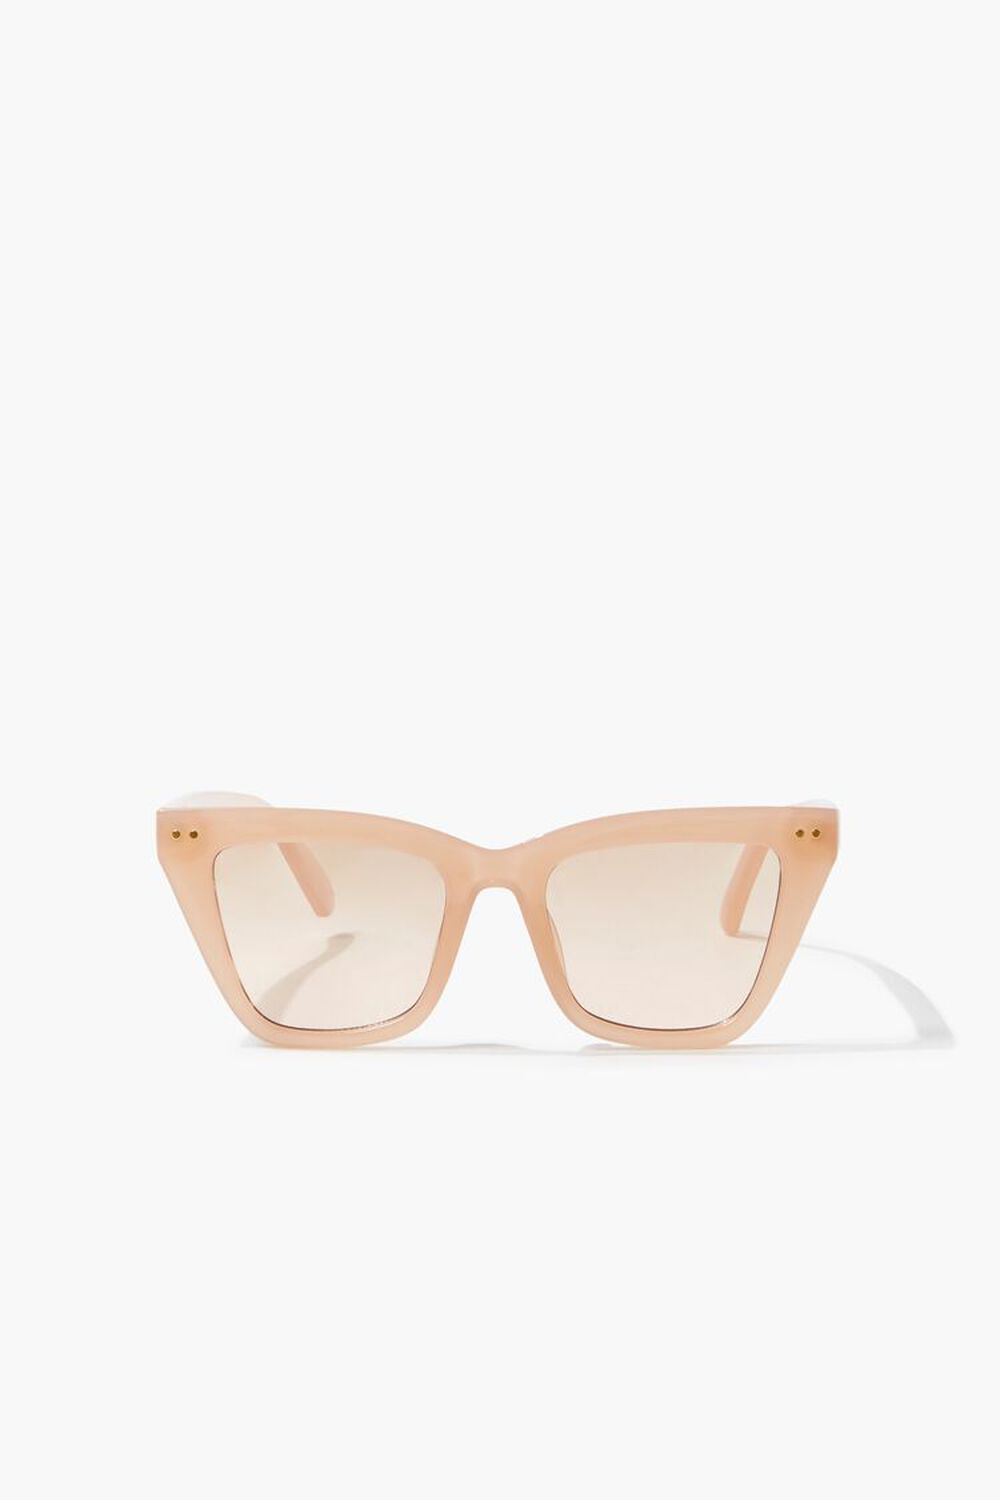 NUDE Semi-Translucent Square Sunglasses, image 1